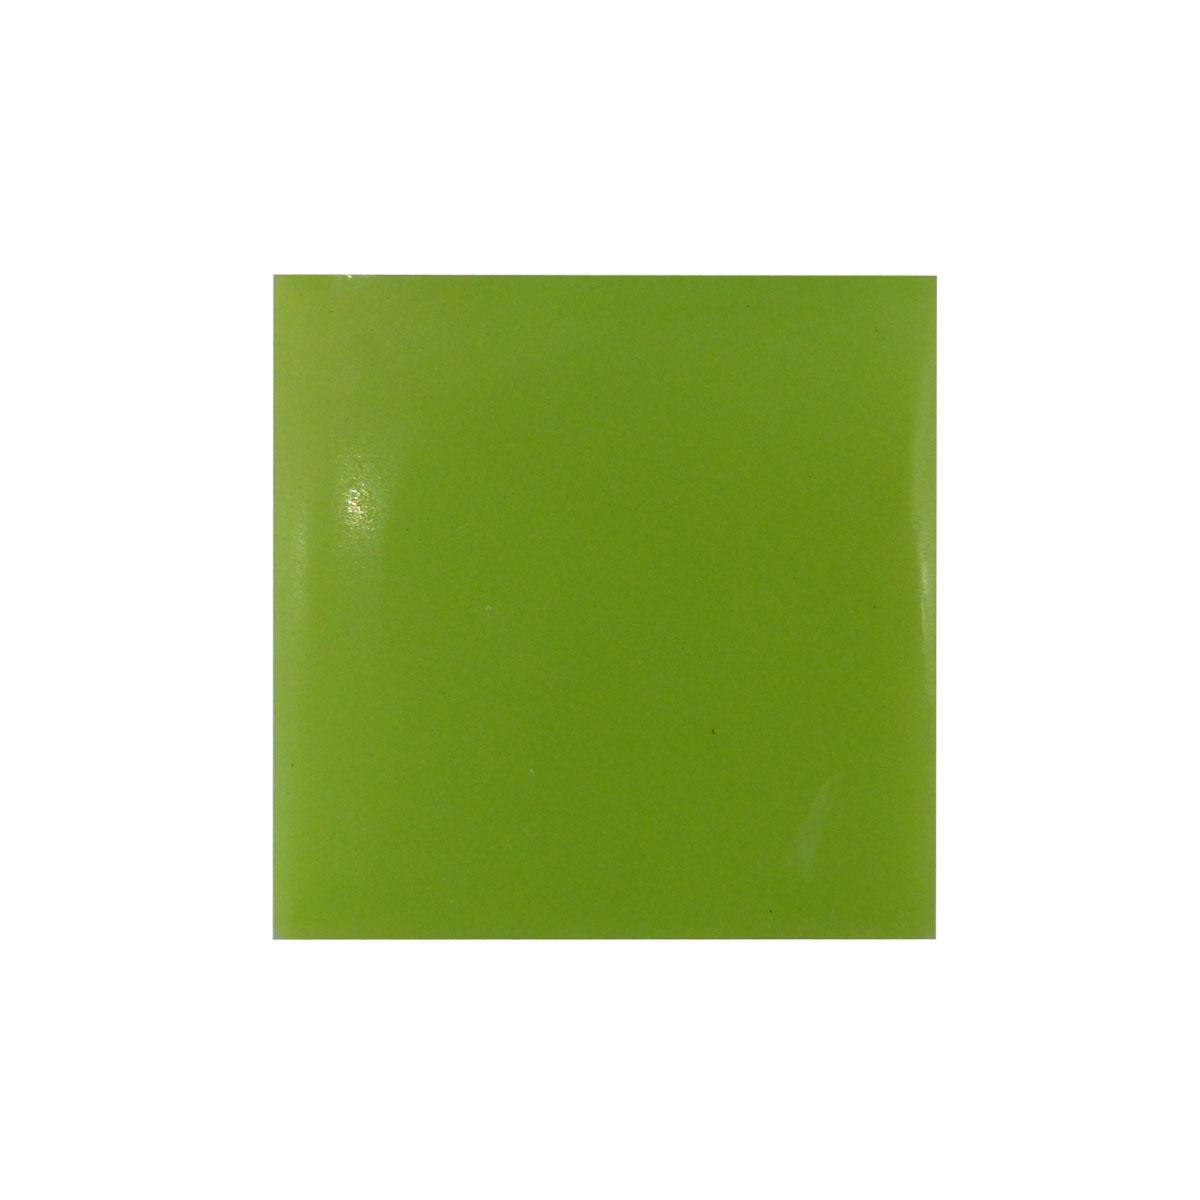 Incudo Green Plain High Intensity Luminescent Inlay Blank - 50x50x3mm